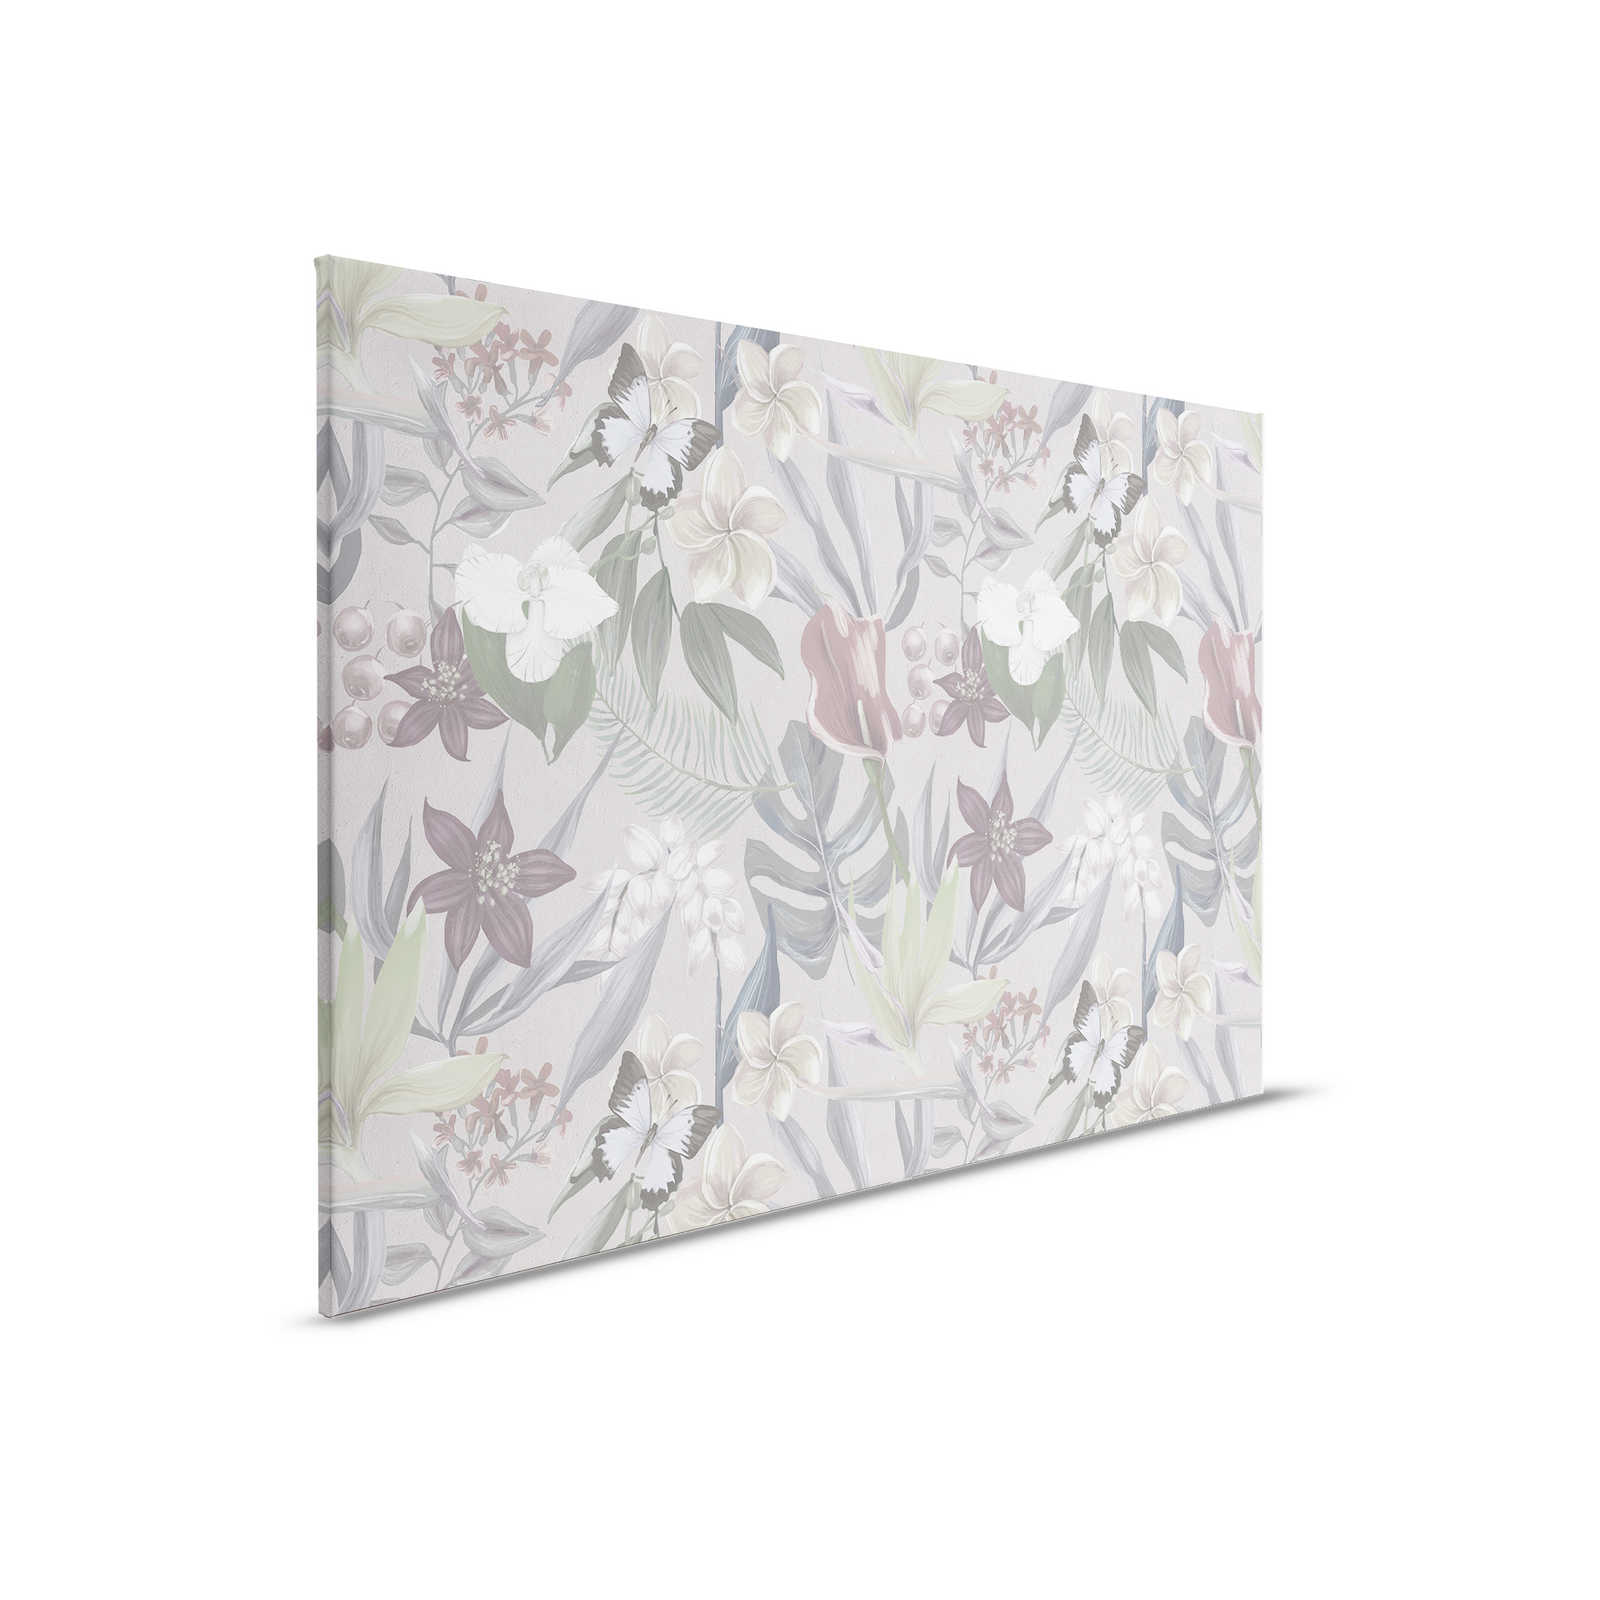 Lienzo Jungla Floral Pintura dibujada | gris, blanco - 0,90 m x 0,60 m
